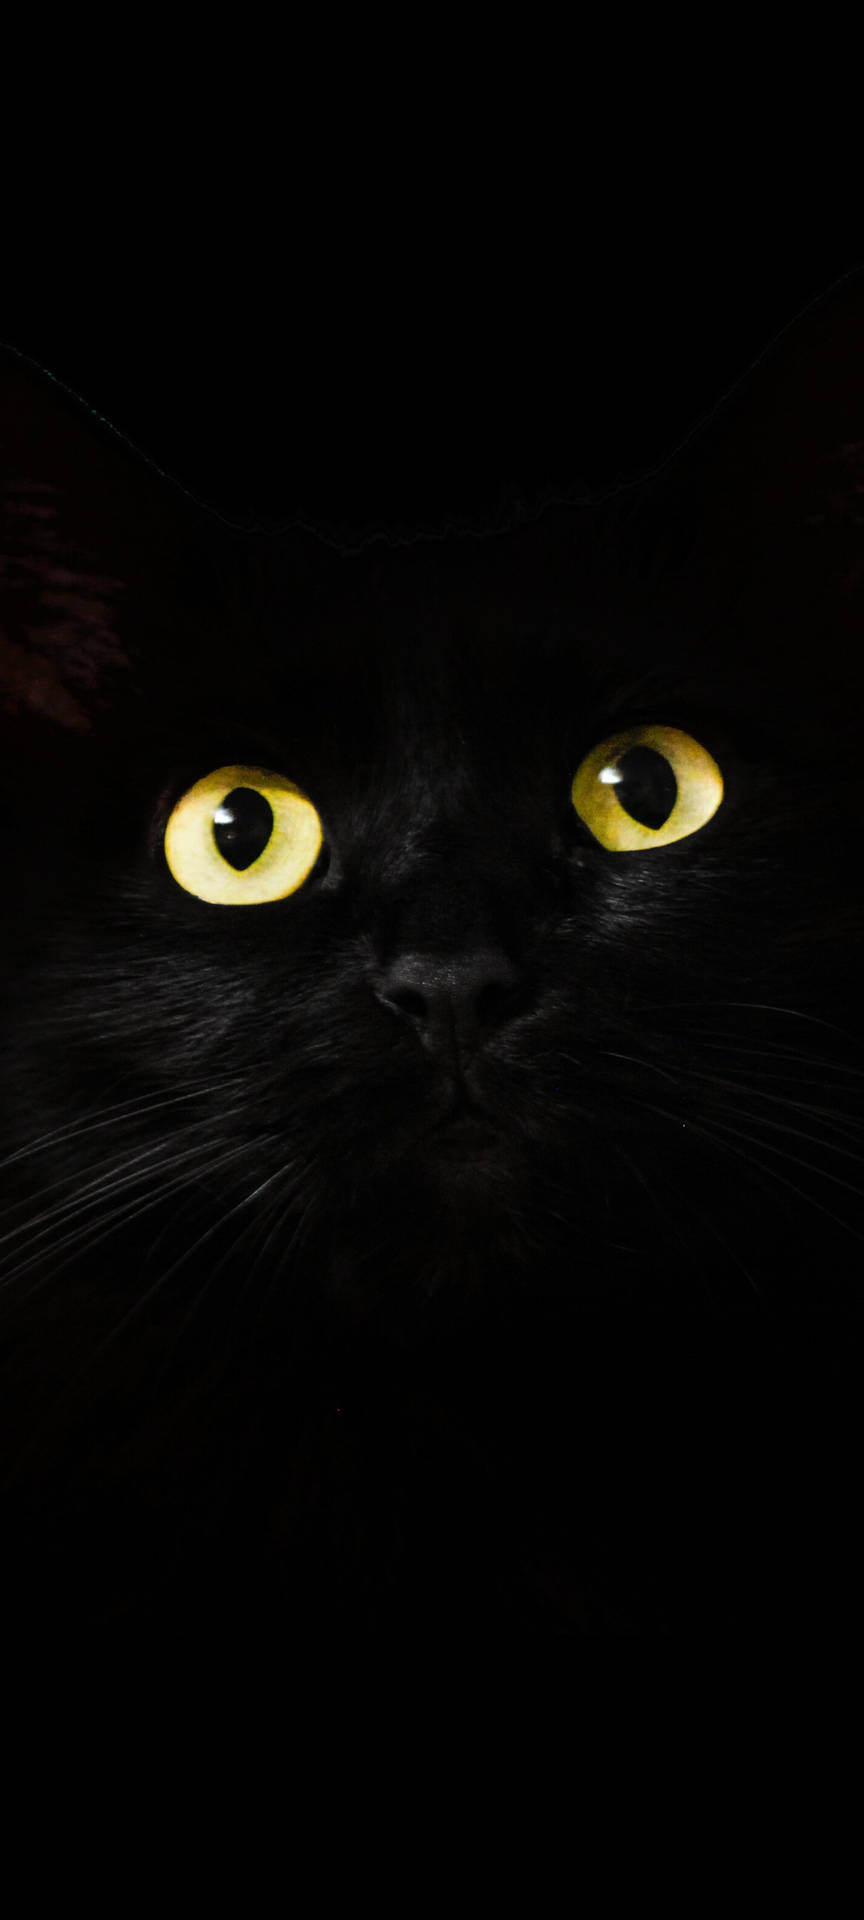 Download Note 10 Plus Black Cat Wallpaper 